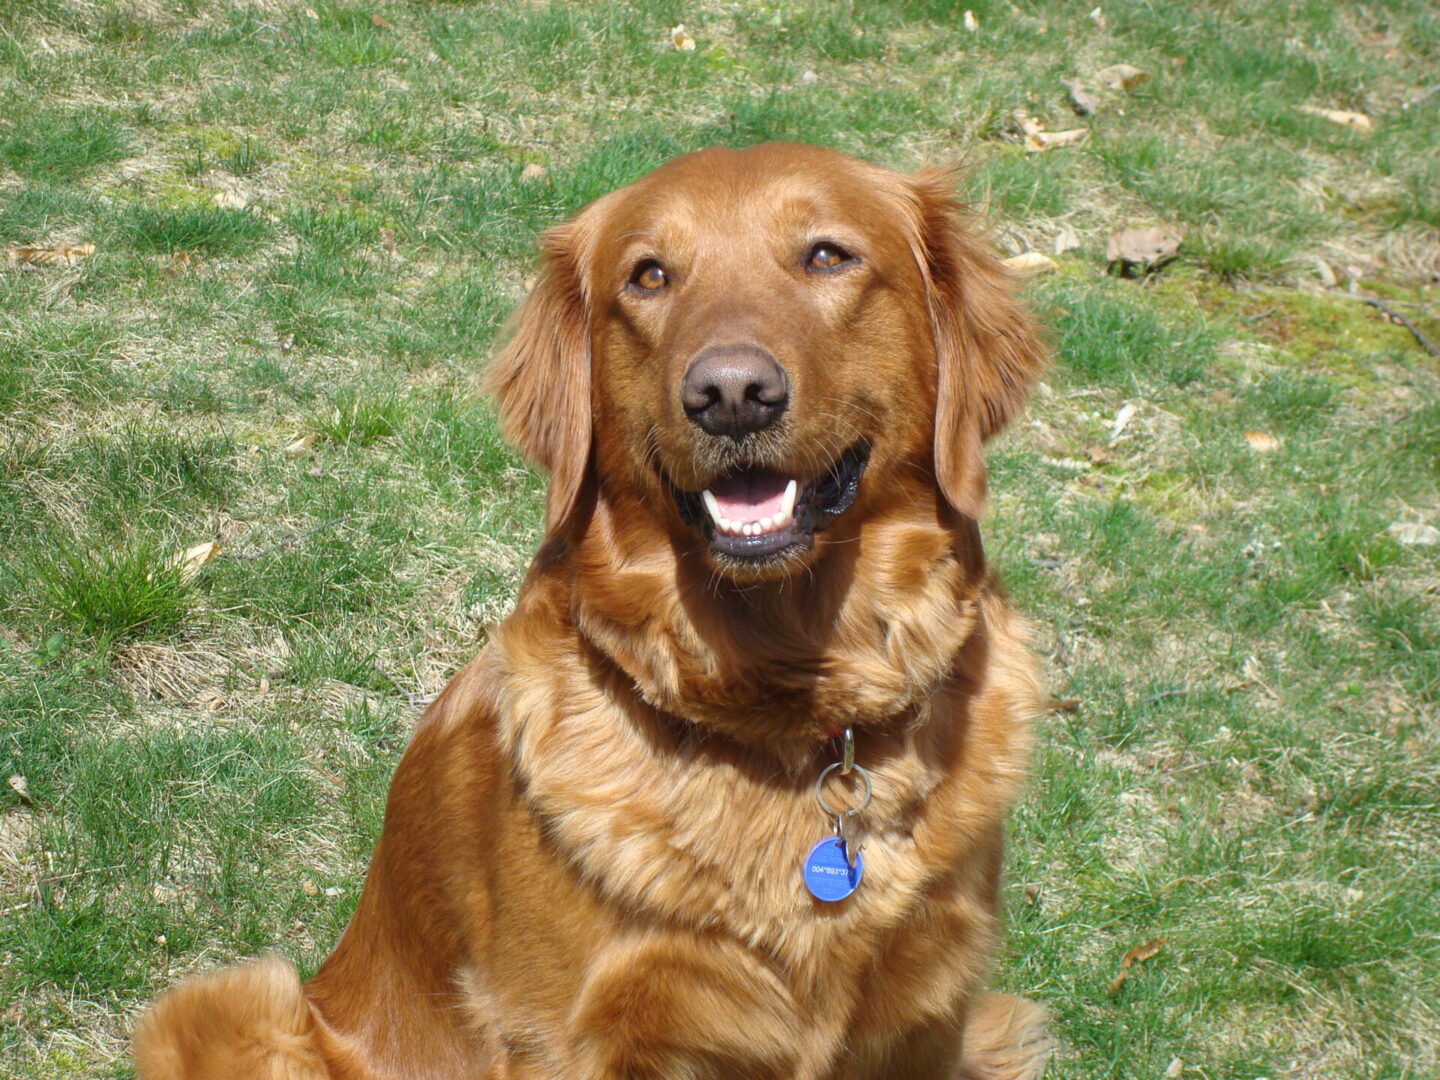 A smiling golden retriever sitting on grass.